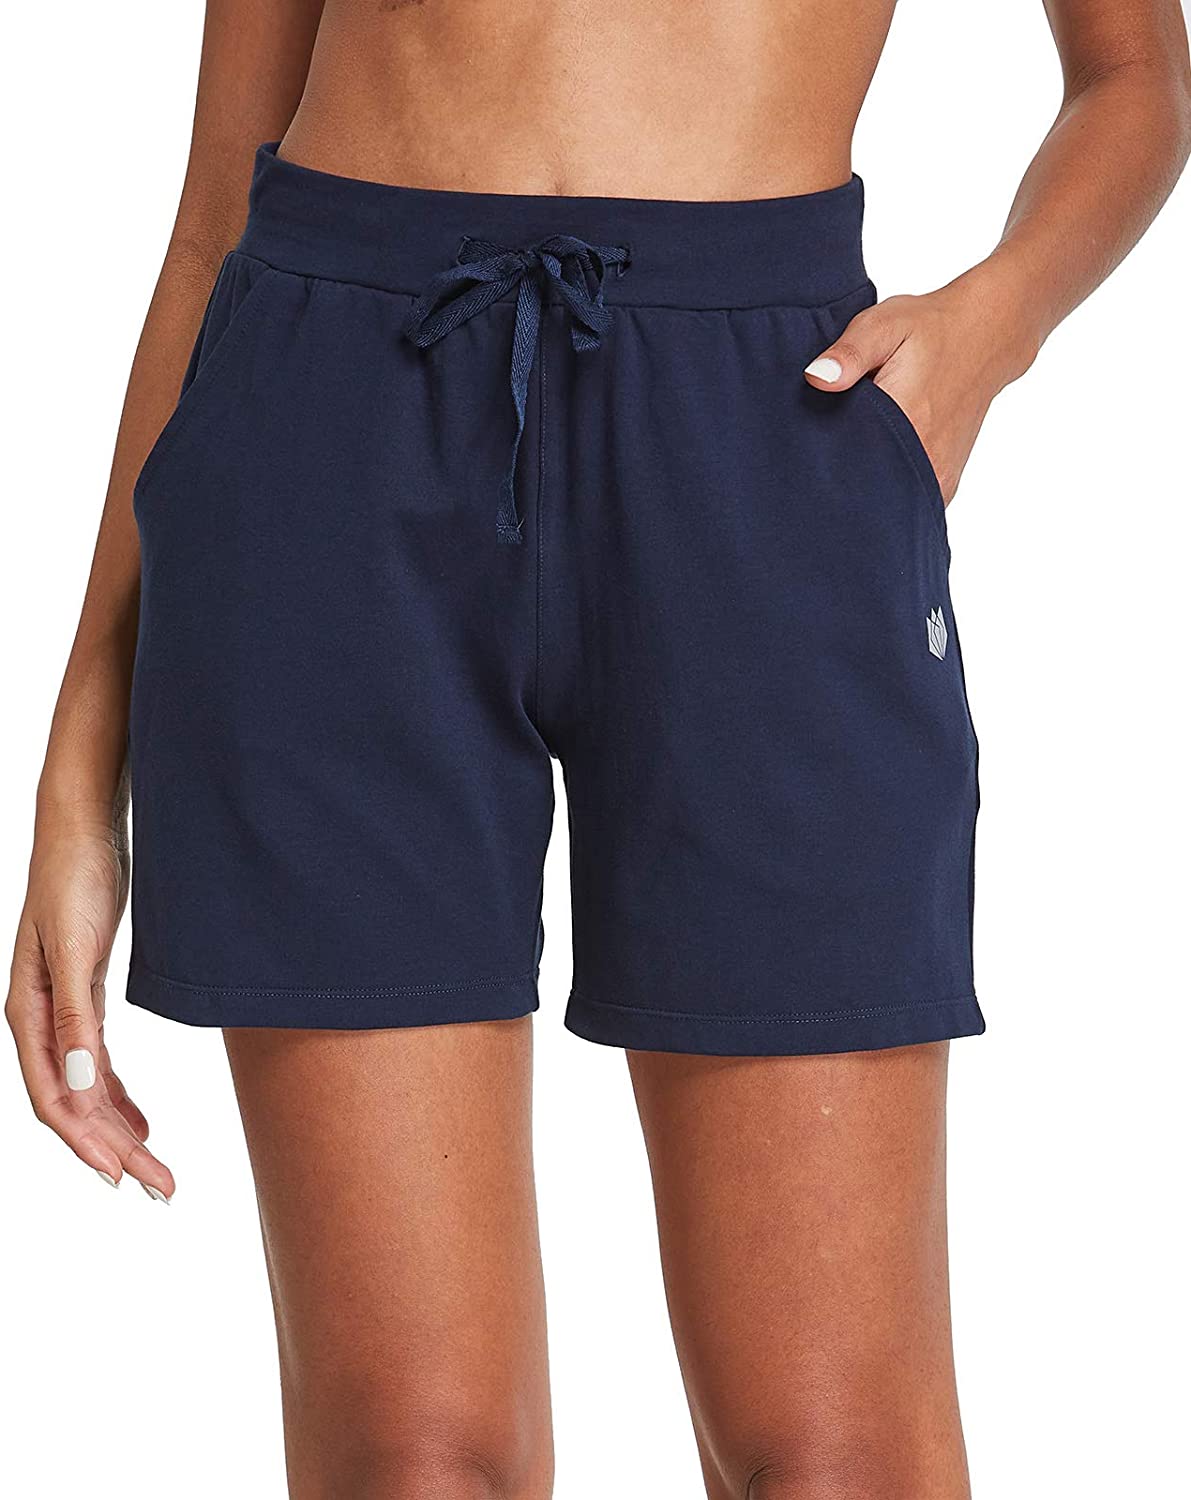 FitsT4 8 Women's Activewear Athletic Bermuda Shorts Active Yoga Lounge Short Pants Gym Workout Running Shorts